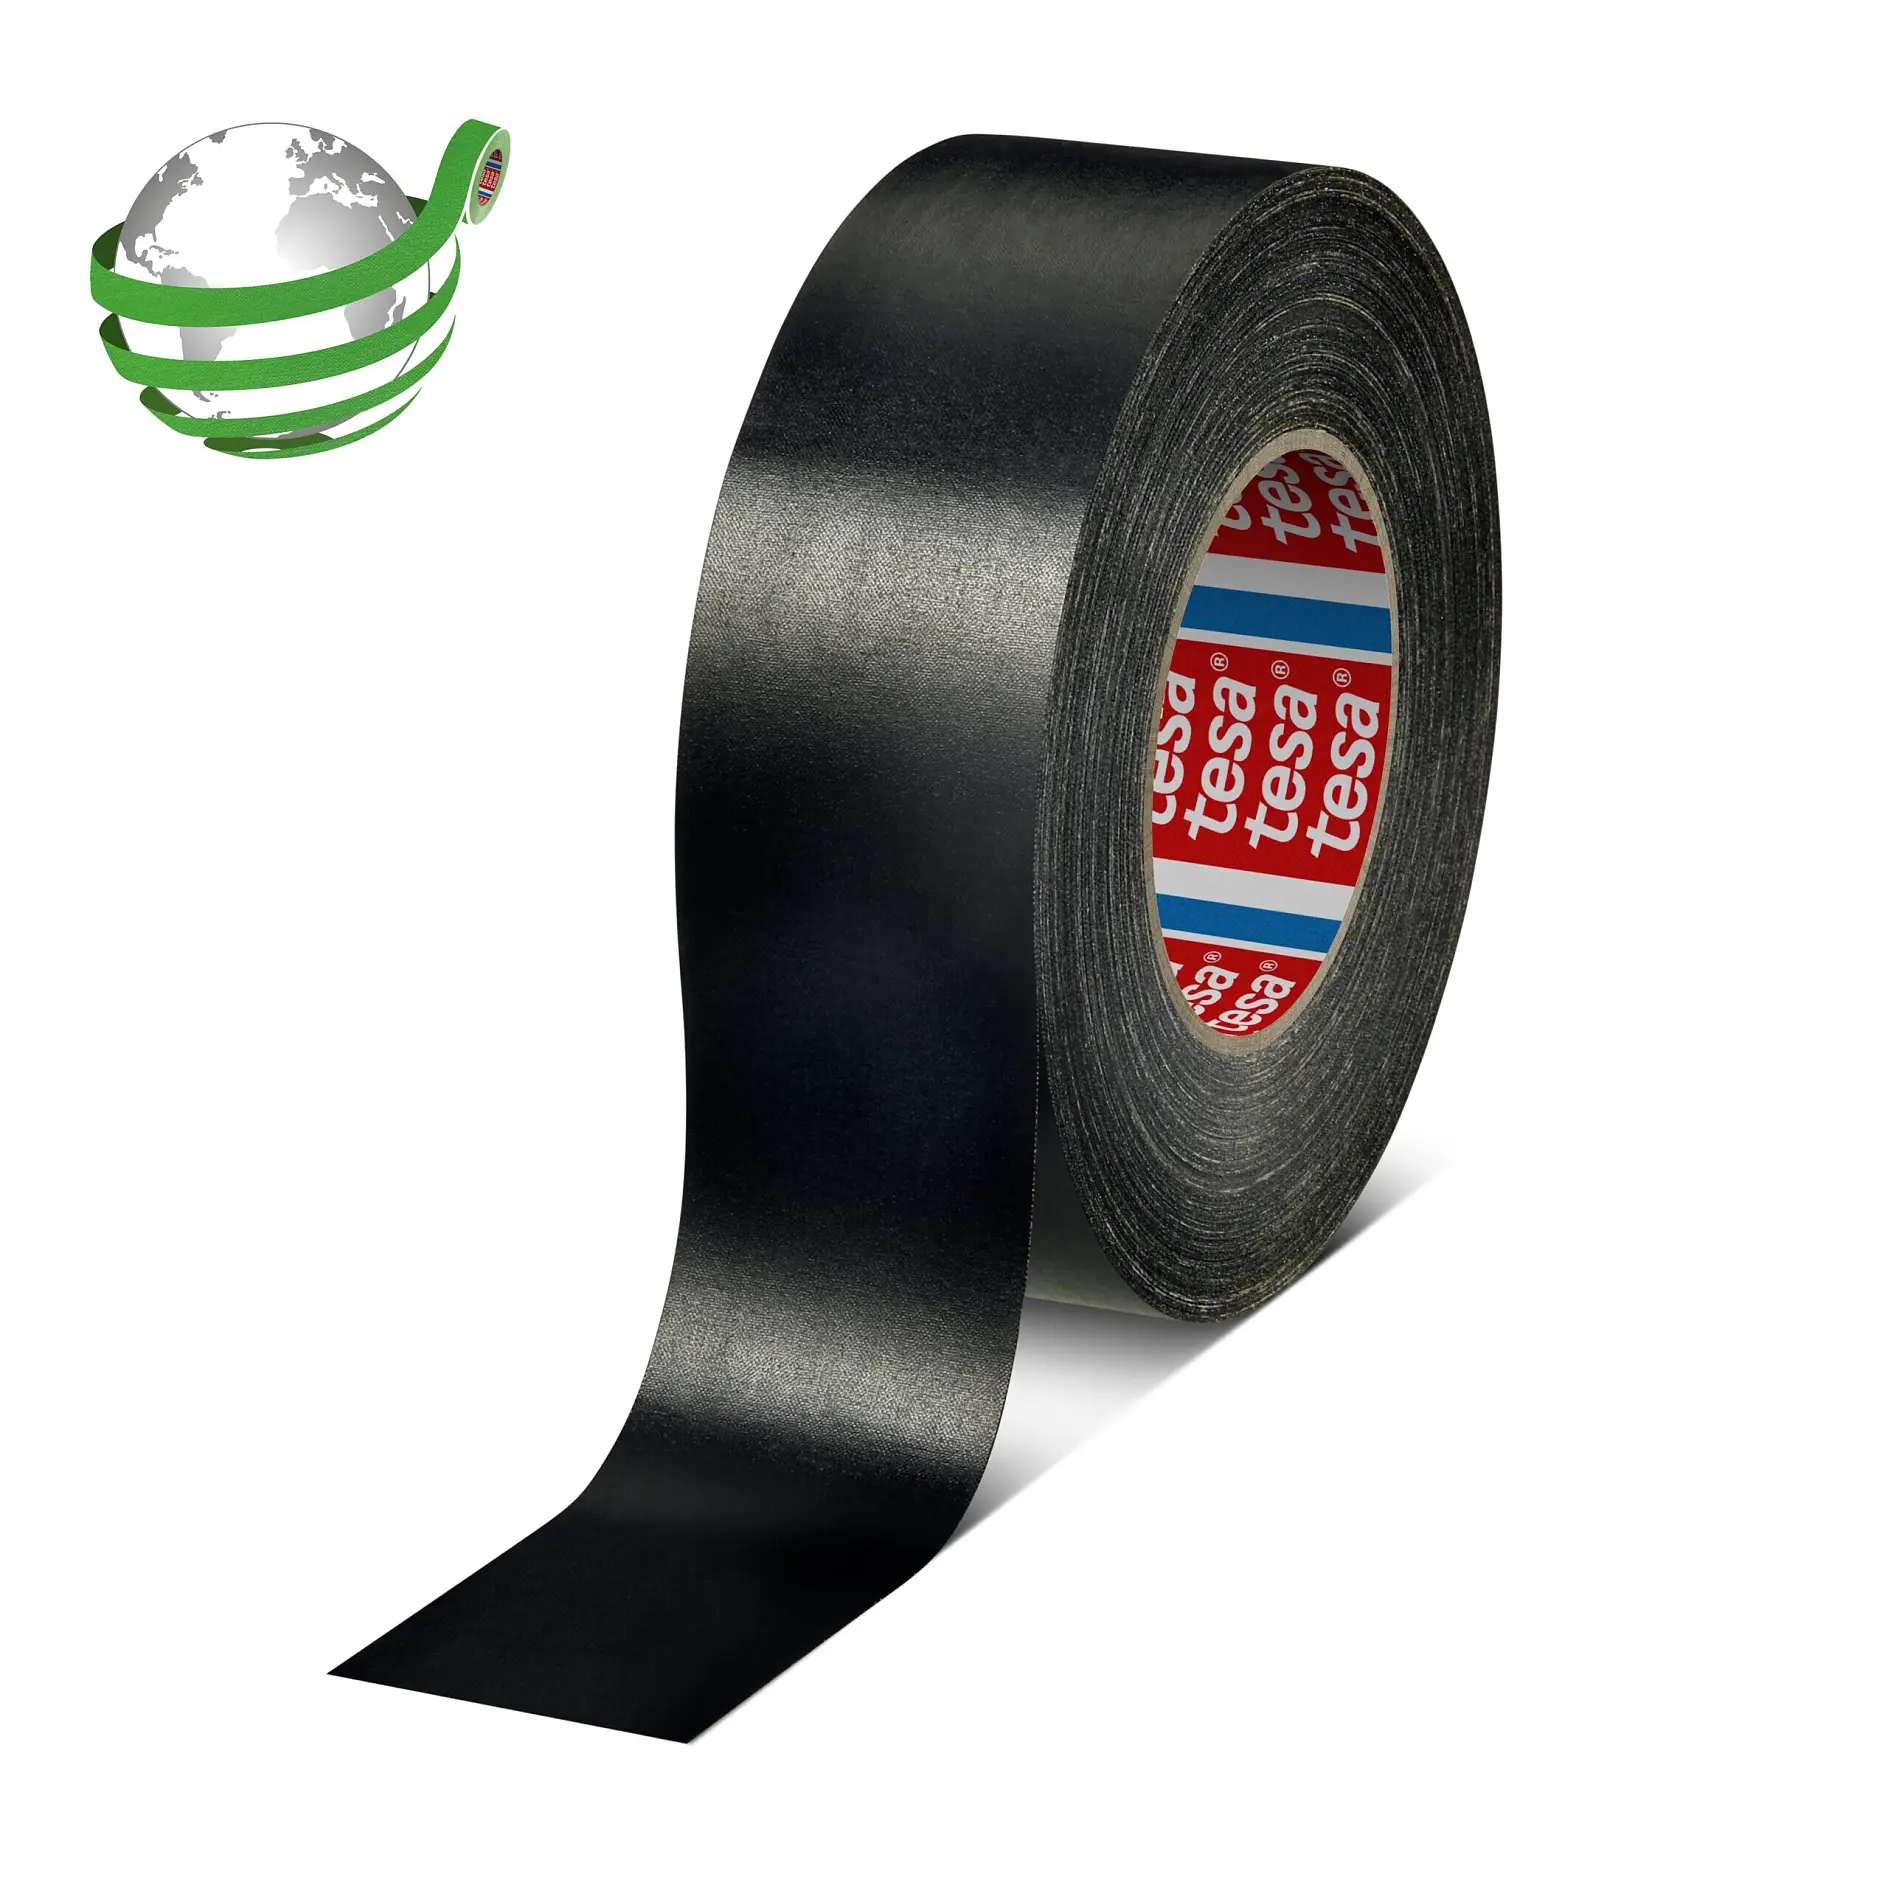 tesa-4657-temperature-resistant-acrylic-cloth-tape-black-046570010900-pr-with-marker